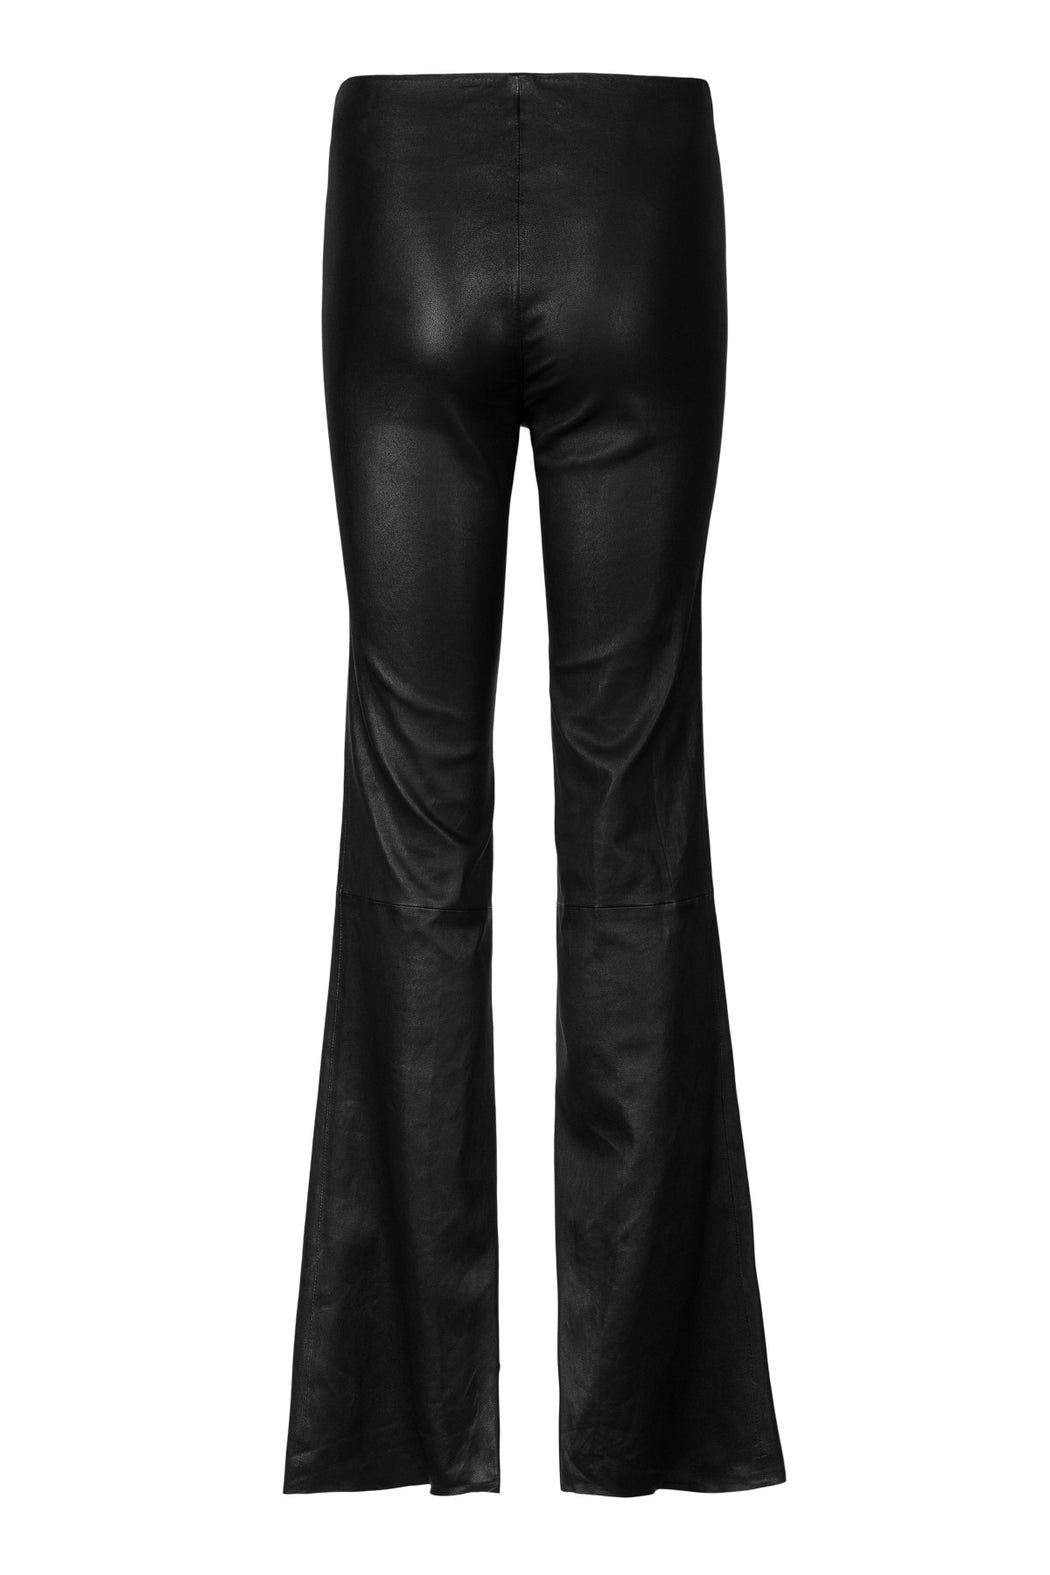 Envelope1976 Lenny pant - Leather Pants Black